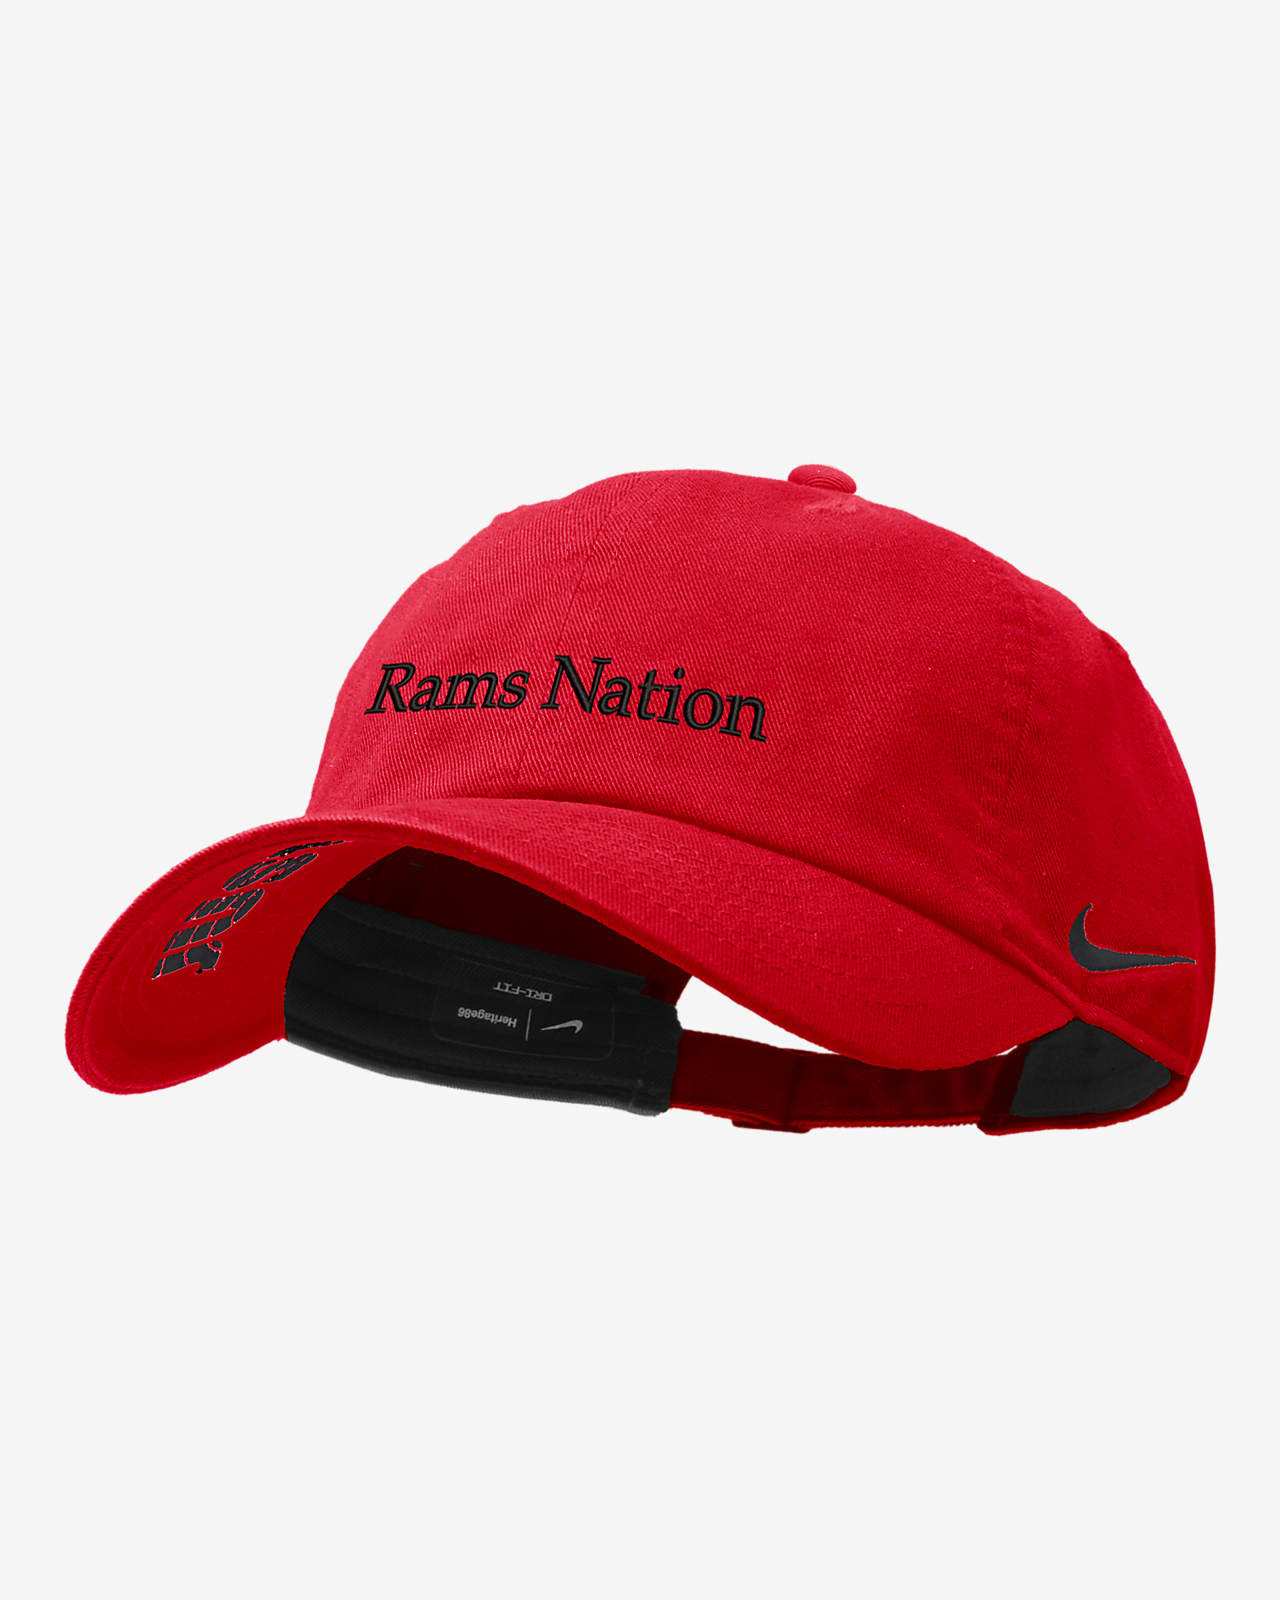 Winston-Salem Nike College Adjustable Cap